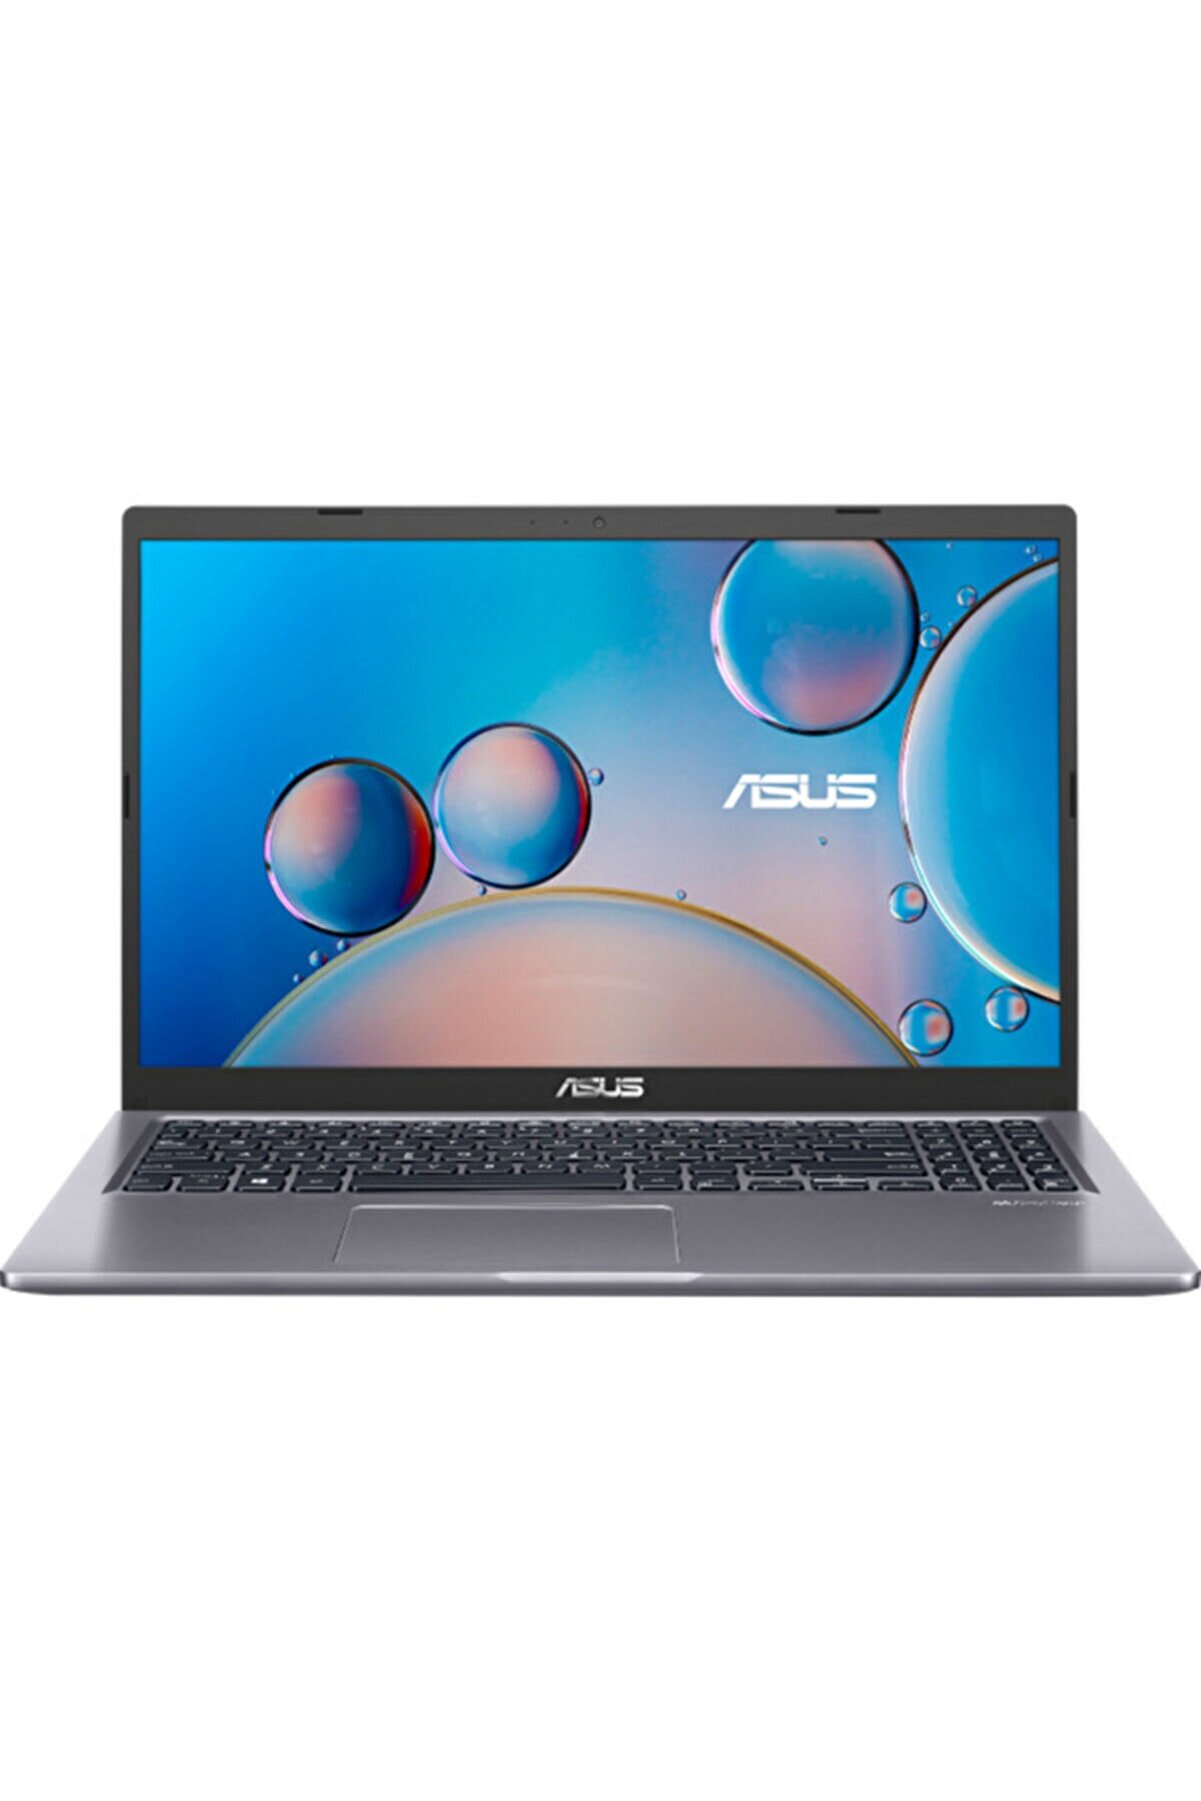 ASUS Laptop X515ep-ej204t I5-1135g7 8gb Ram 512gb Ssd 32gb Optane Mx330 2gb 15.6" Fhd W10 Notebook